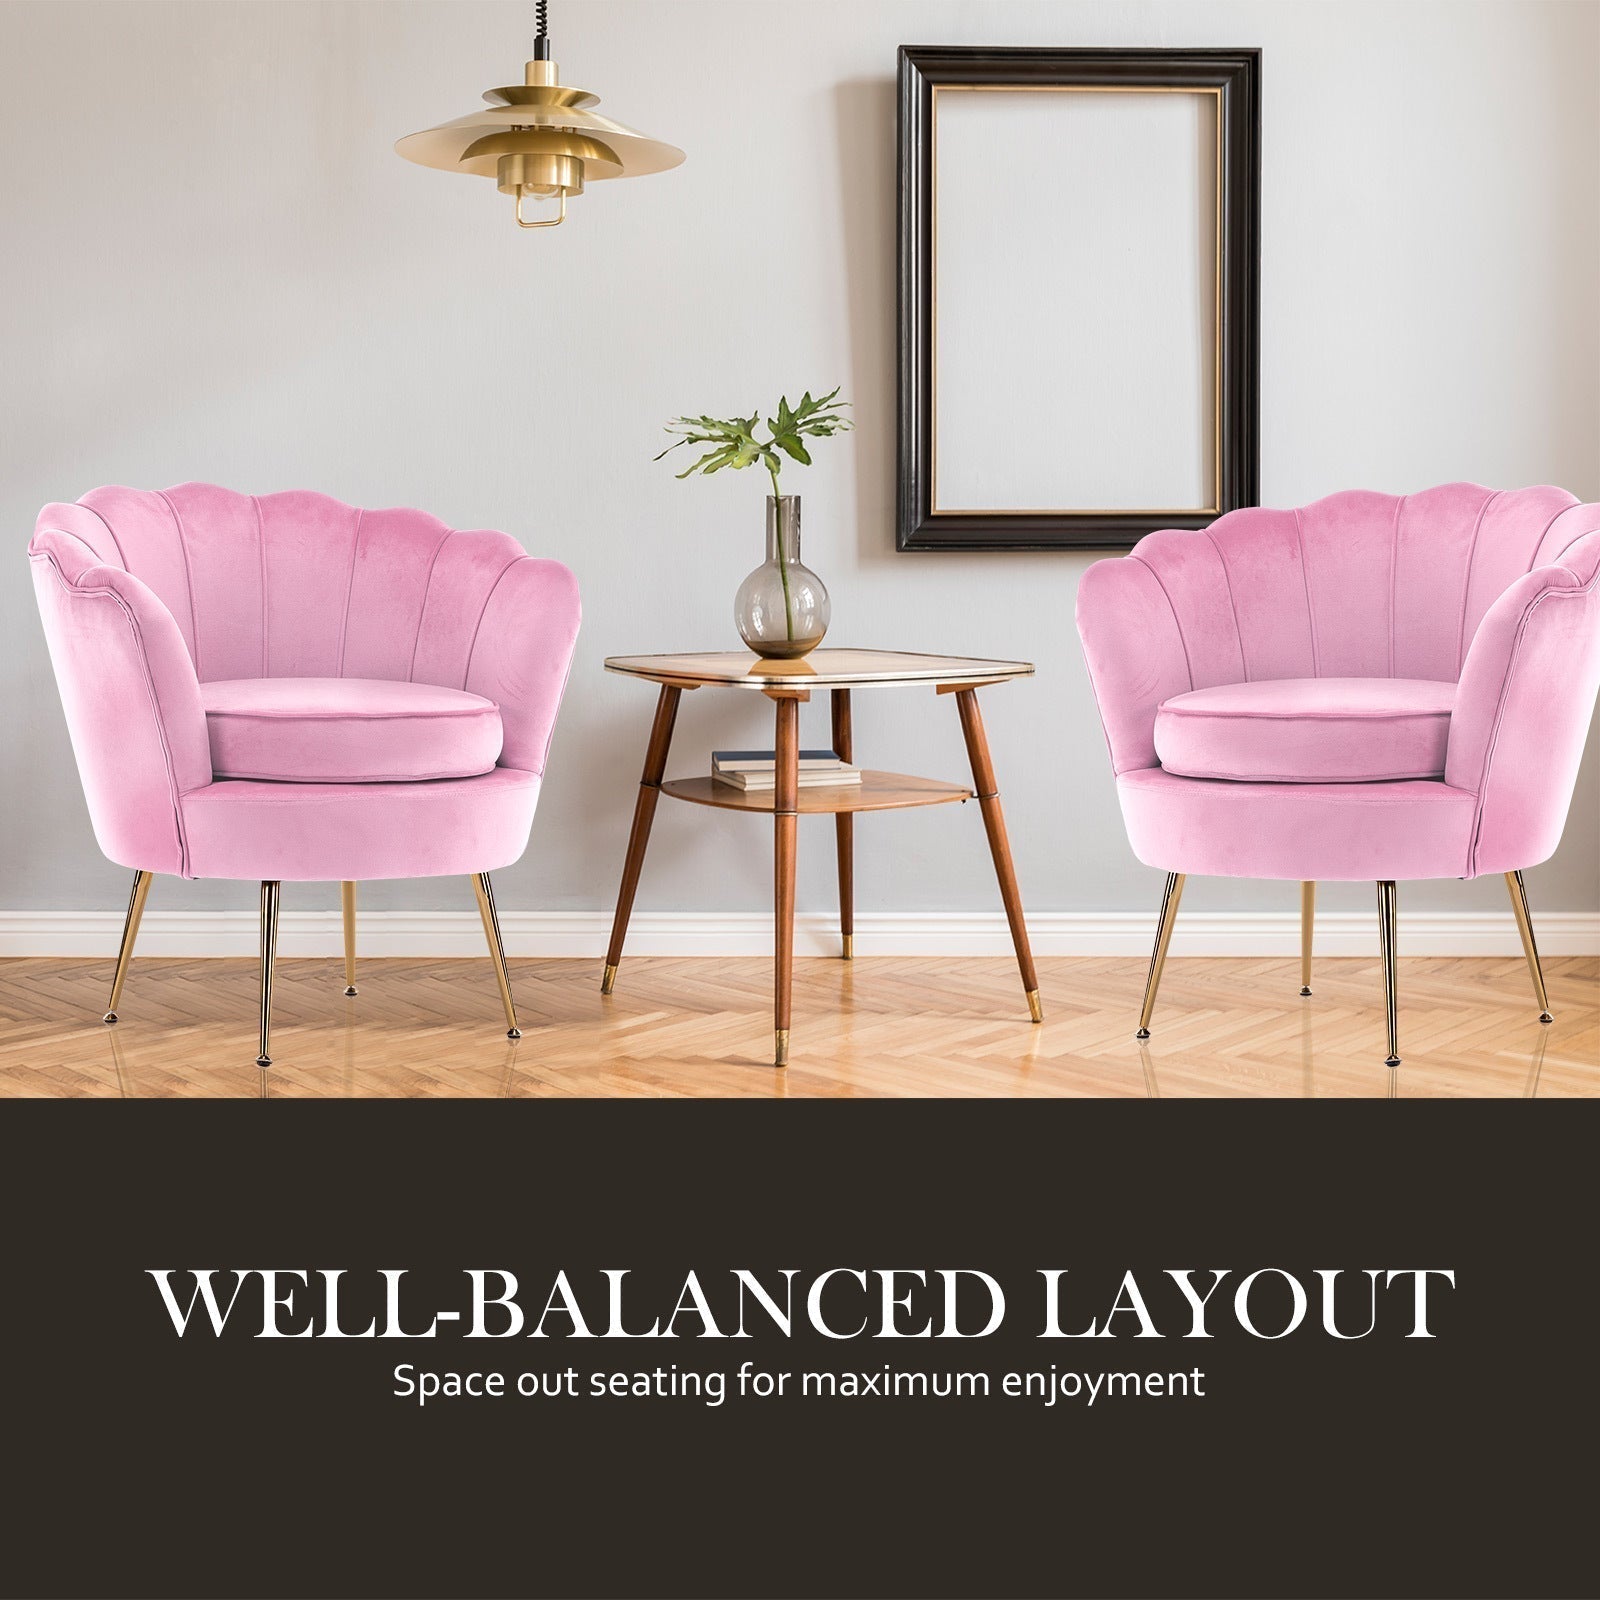 La Bella Shell Scallop Pink Armchair Accent Chair Velvet + Round Ottoman Footstool